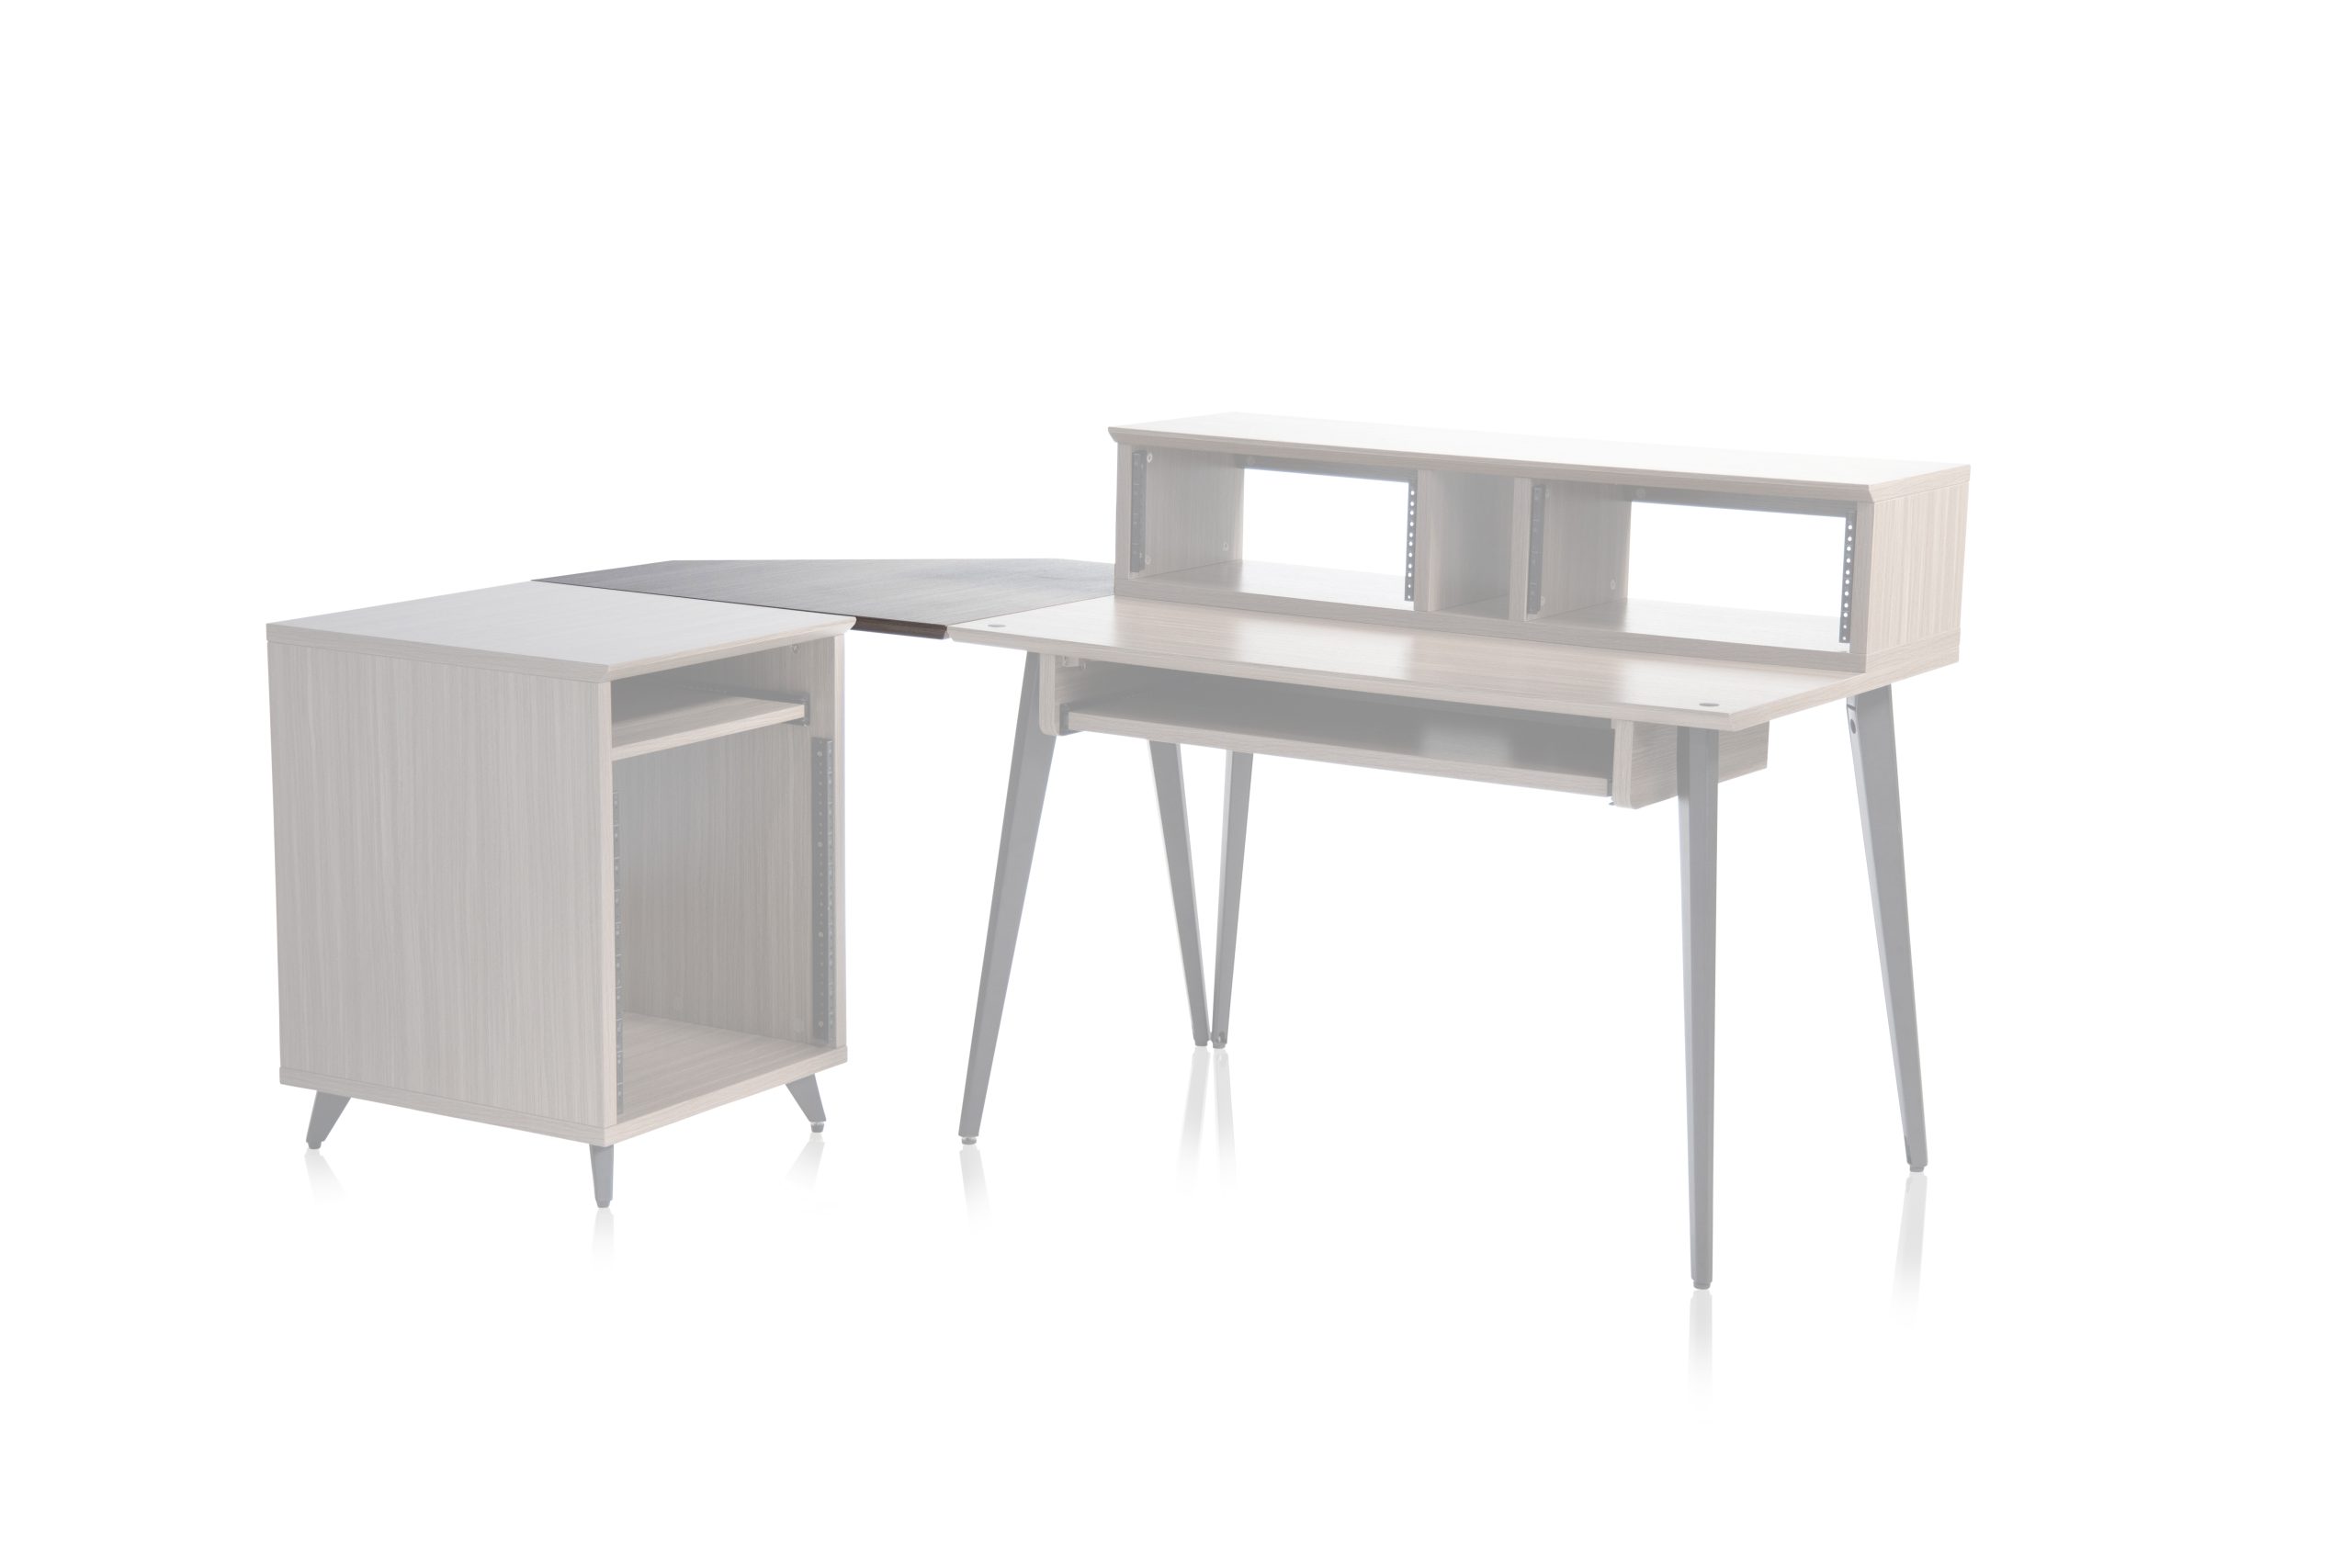 Elite Series Furniture Desk Corner Section – GRY-GFW-ELITEDESKCRNR-GRY